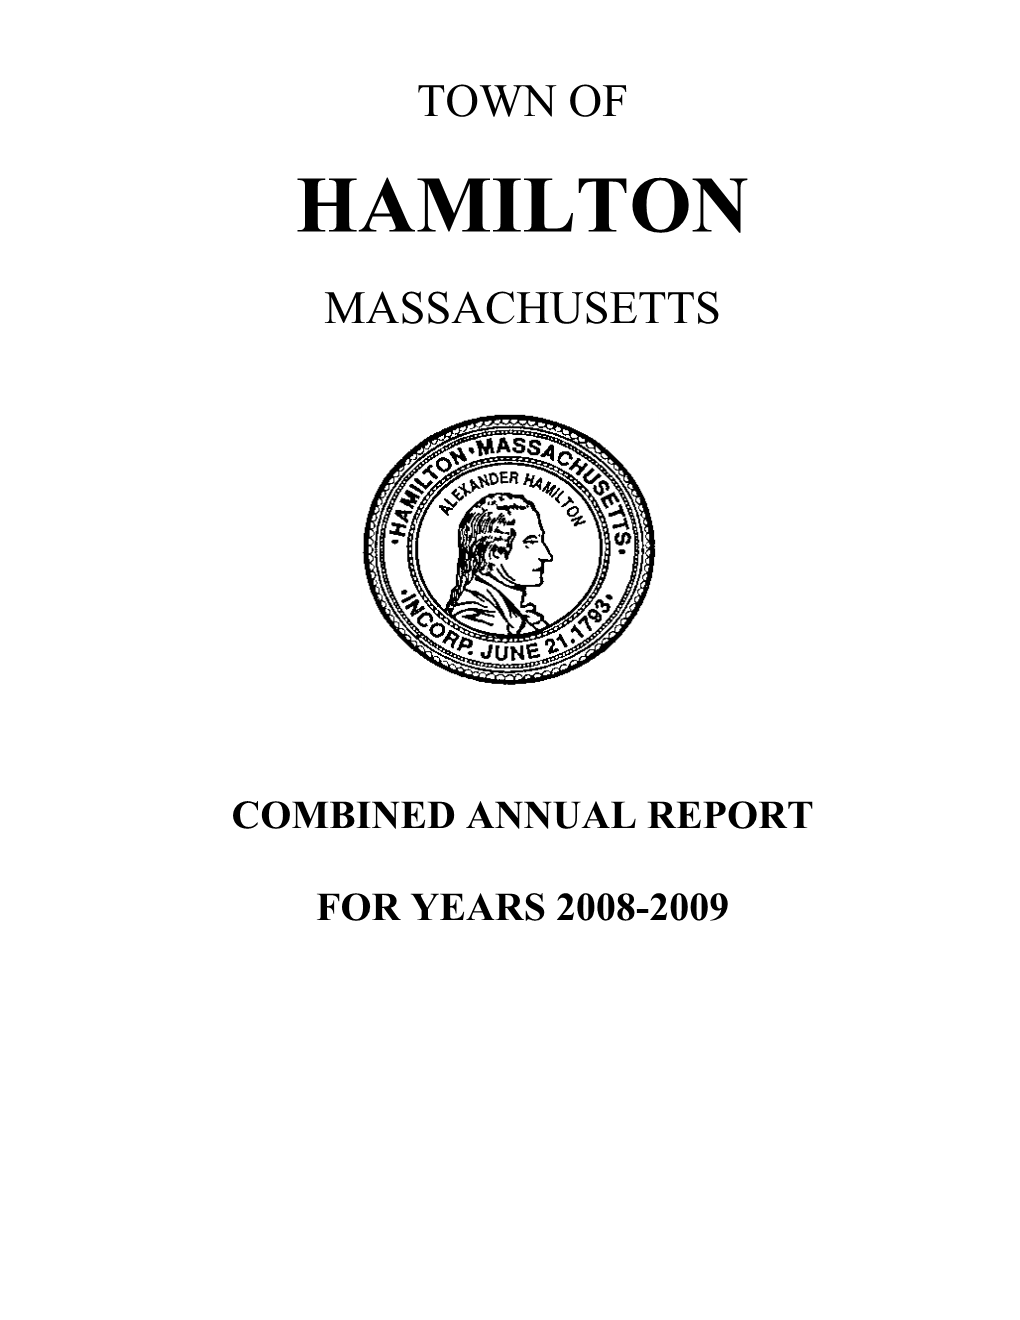 2008-2009 Report